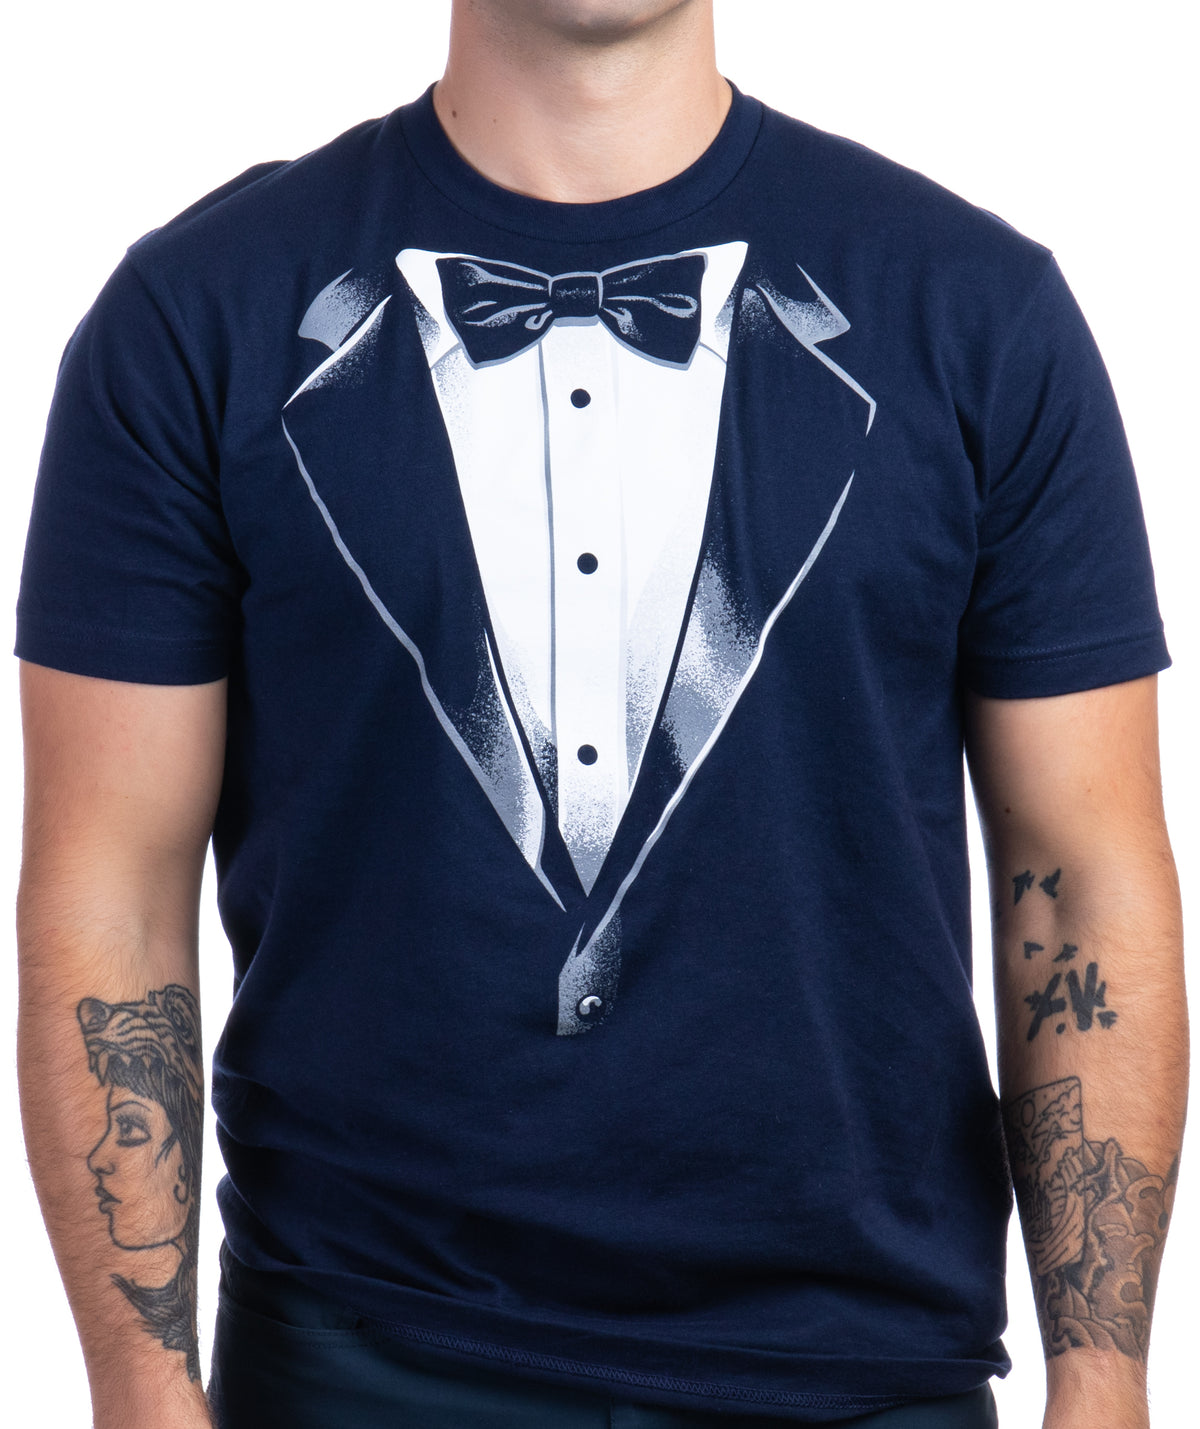 Tuxedo T-shirt - Funny Wedding Party Humor Tux Tee Joke Shirt for Men